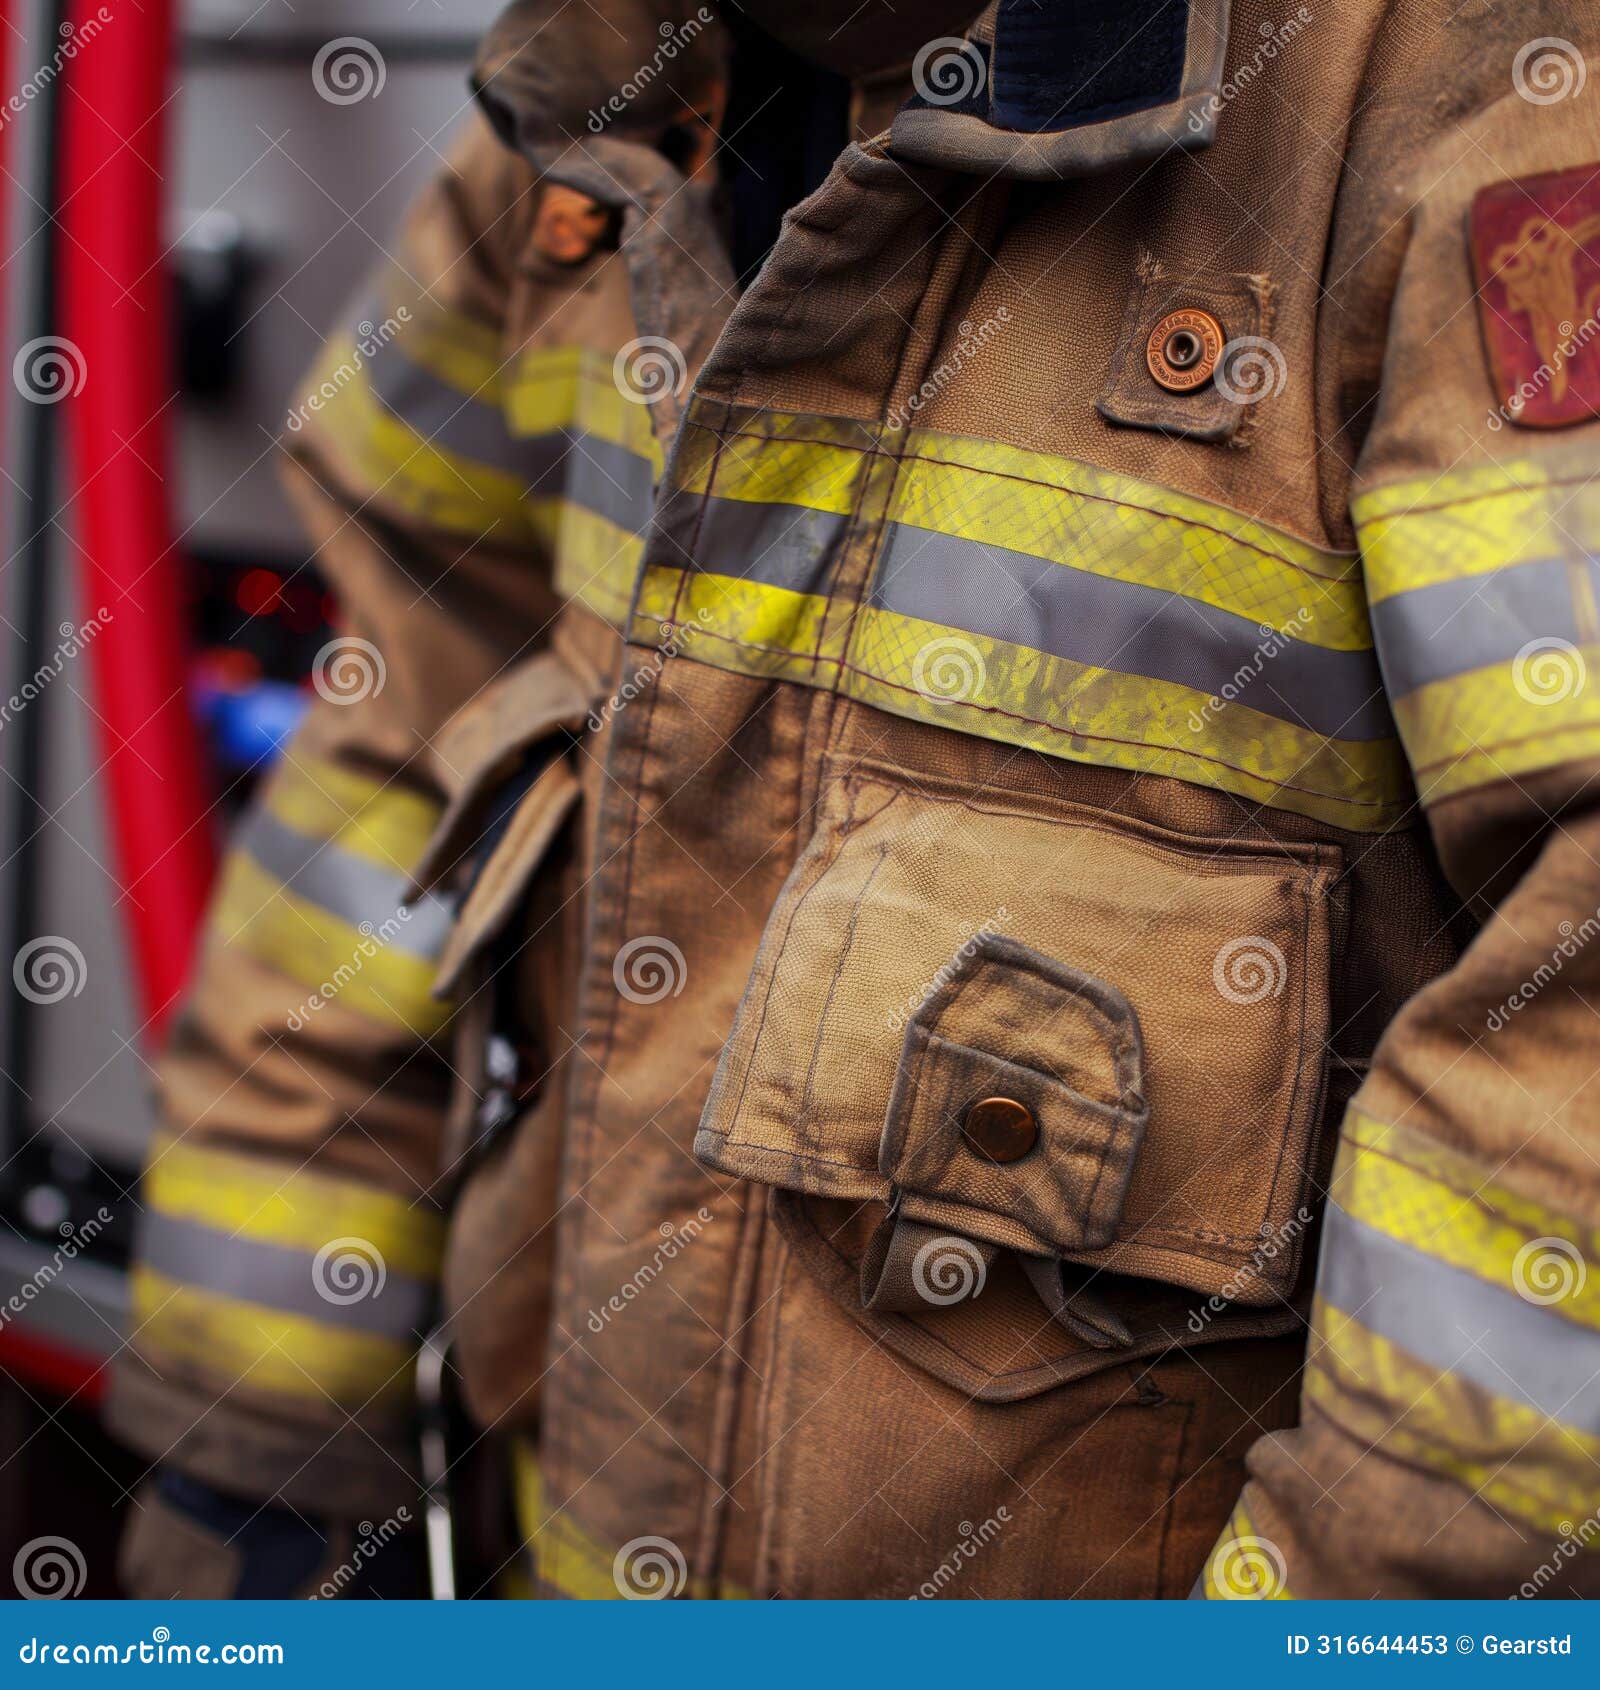 detailed shot of firefighter& x27;s uniform